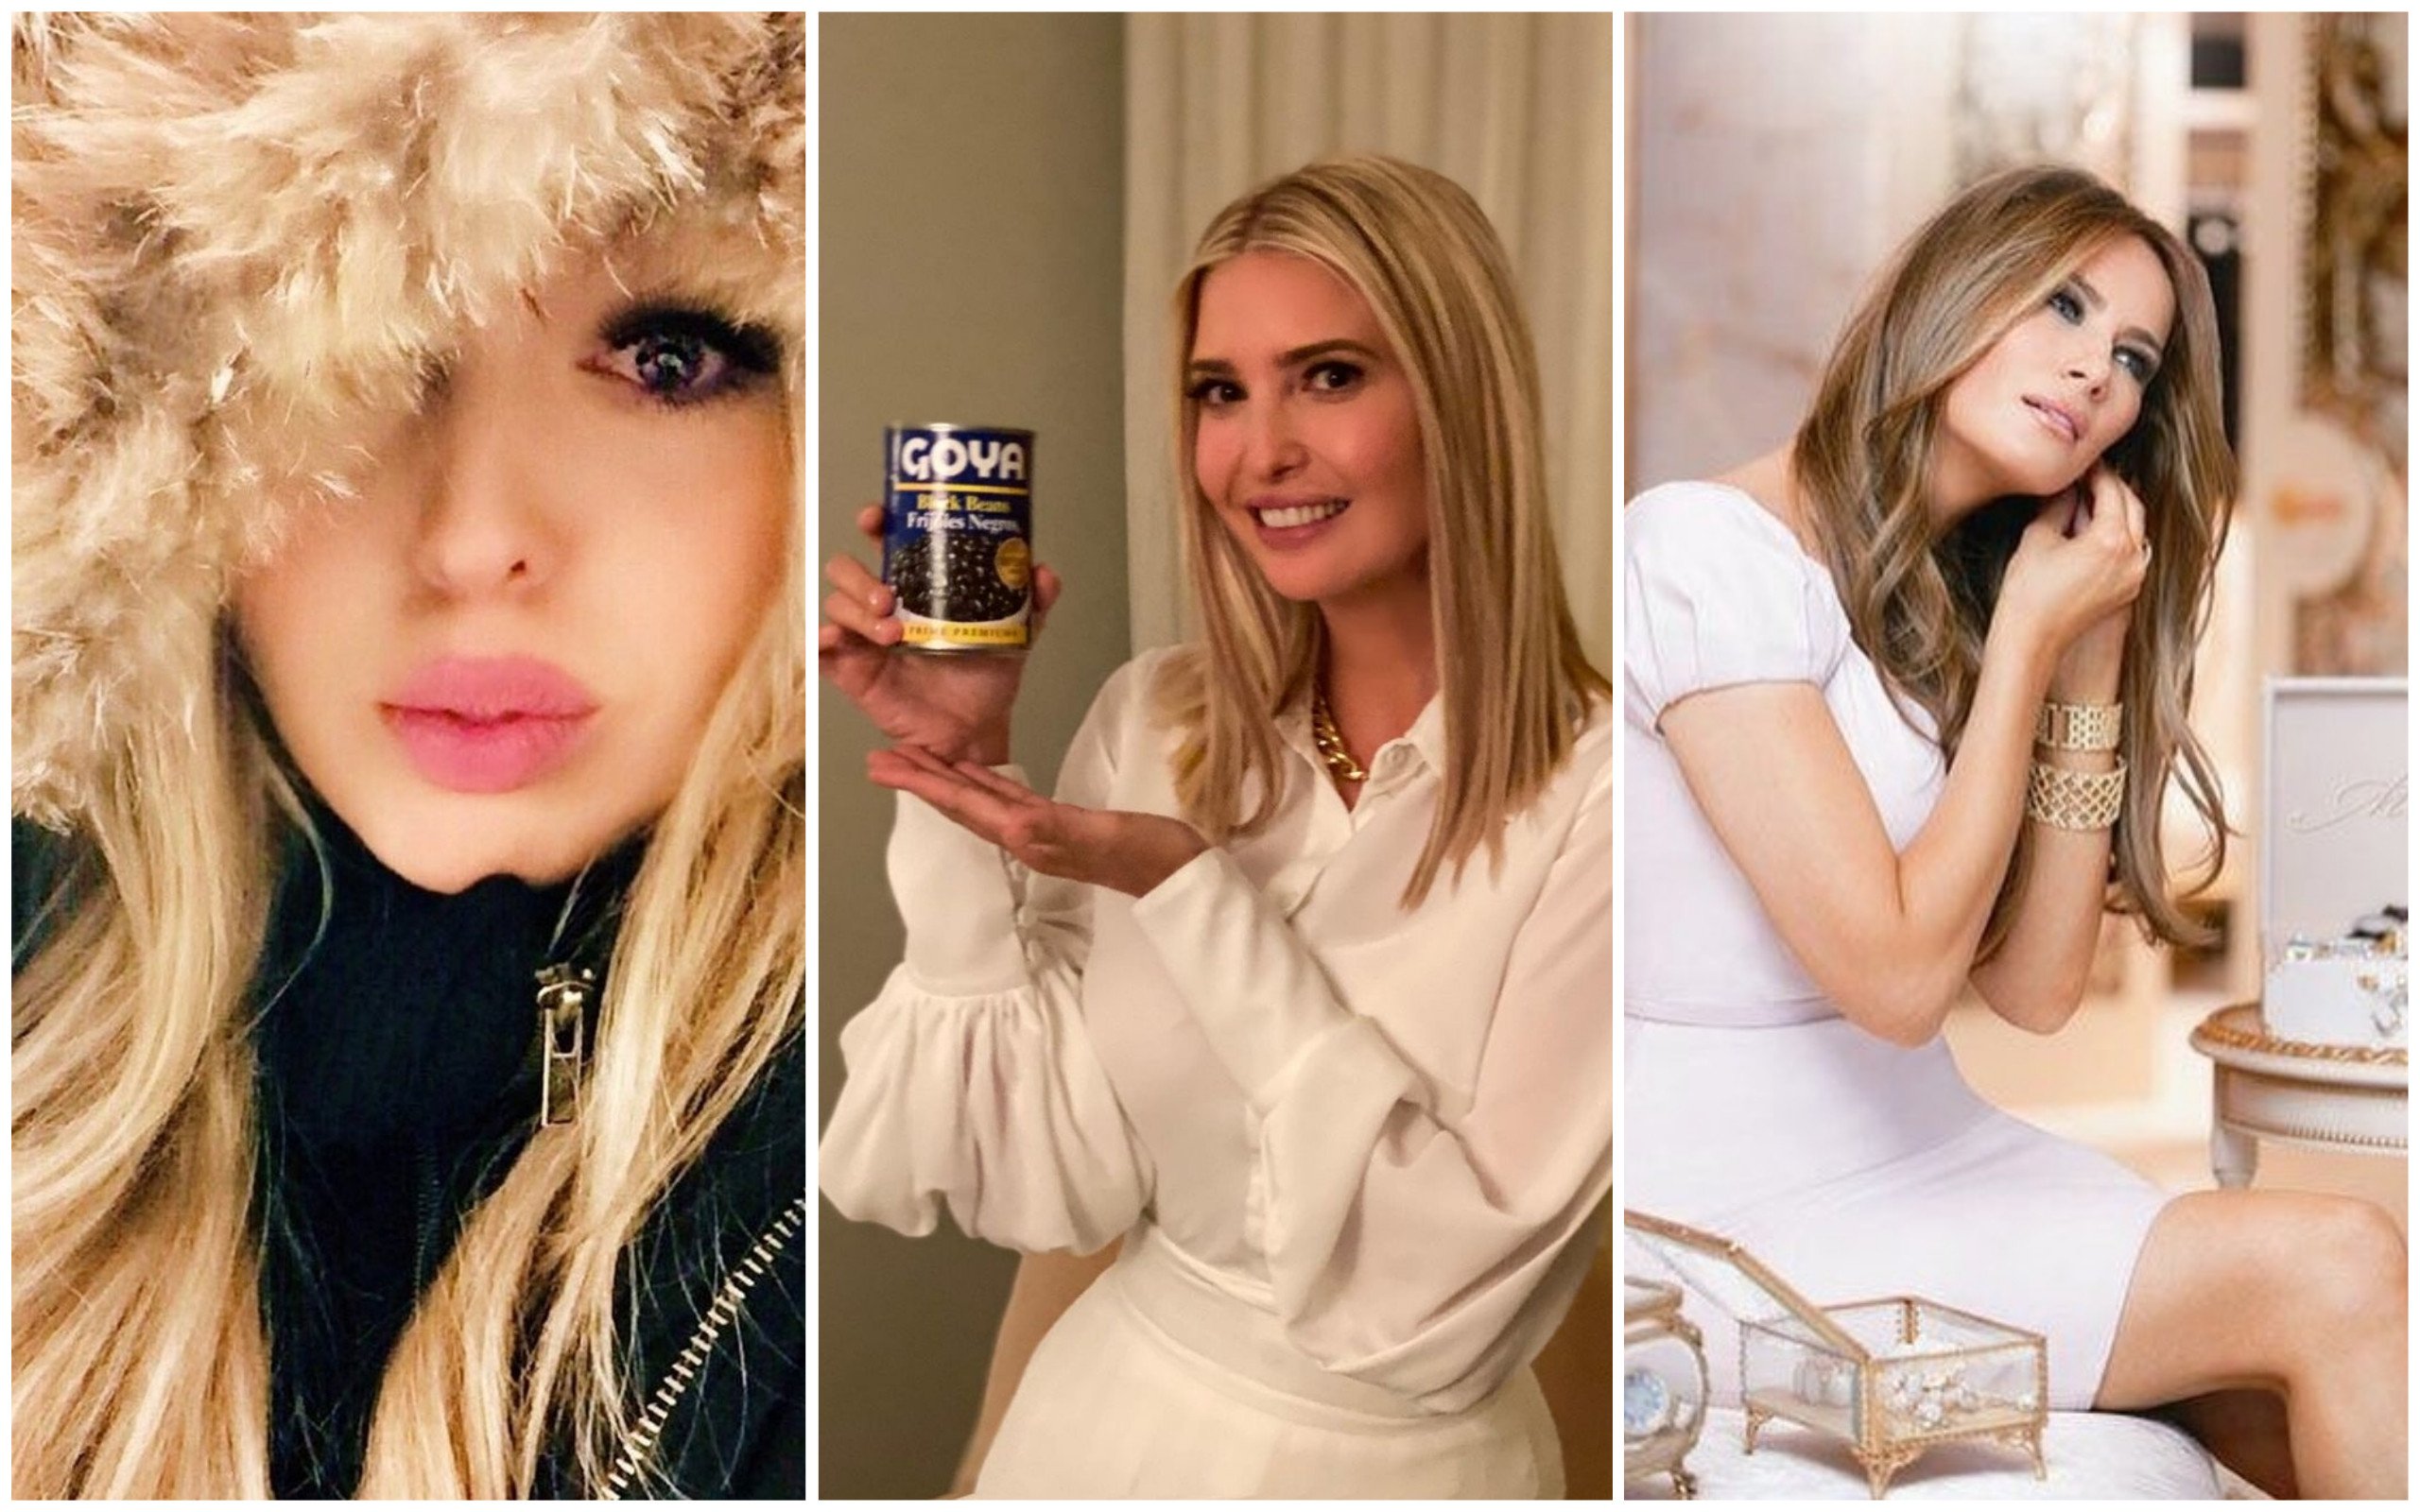 What are Tiffany, Ivanka and Melania Trump’s beauty routines? Photo: @tiffanytrump, @ivankatrump, @melaniatrumpfashion/Instagram